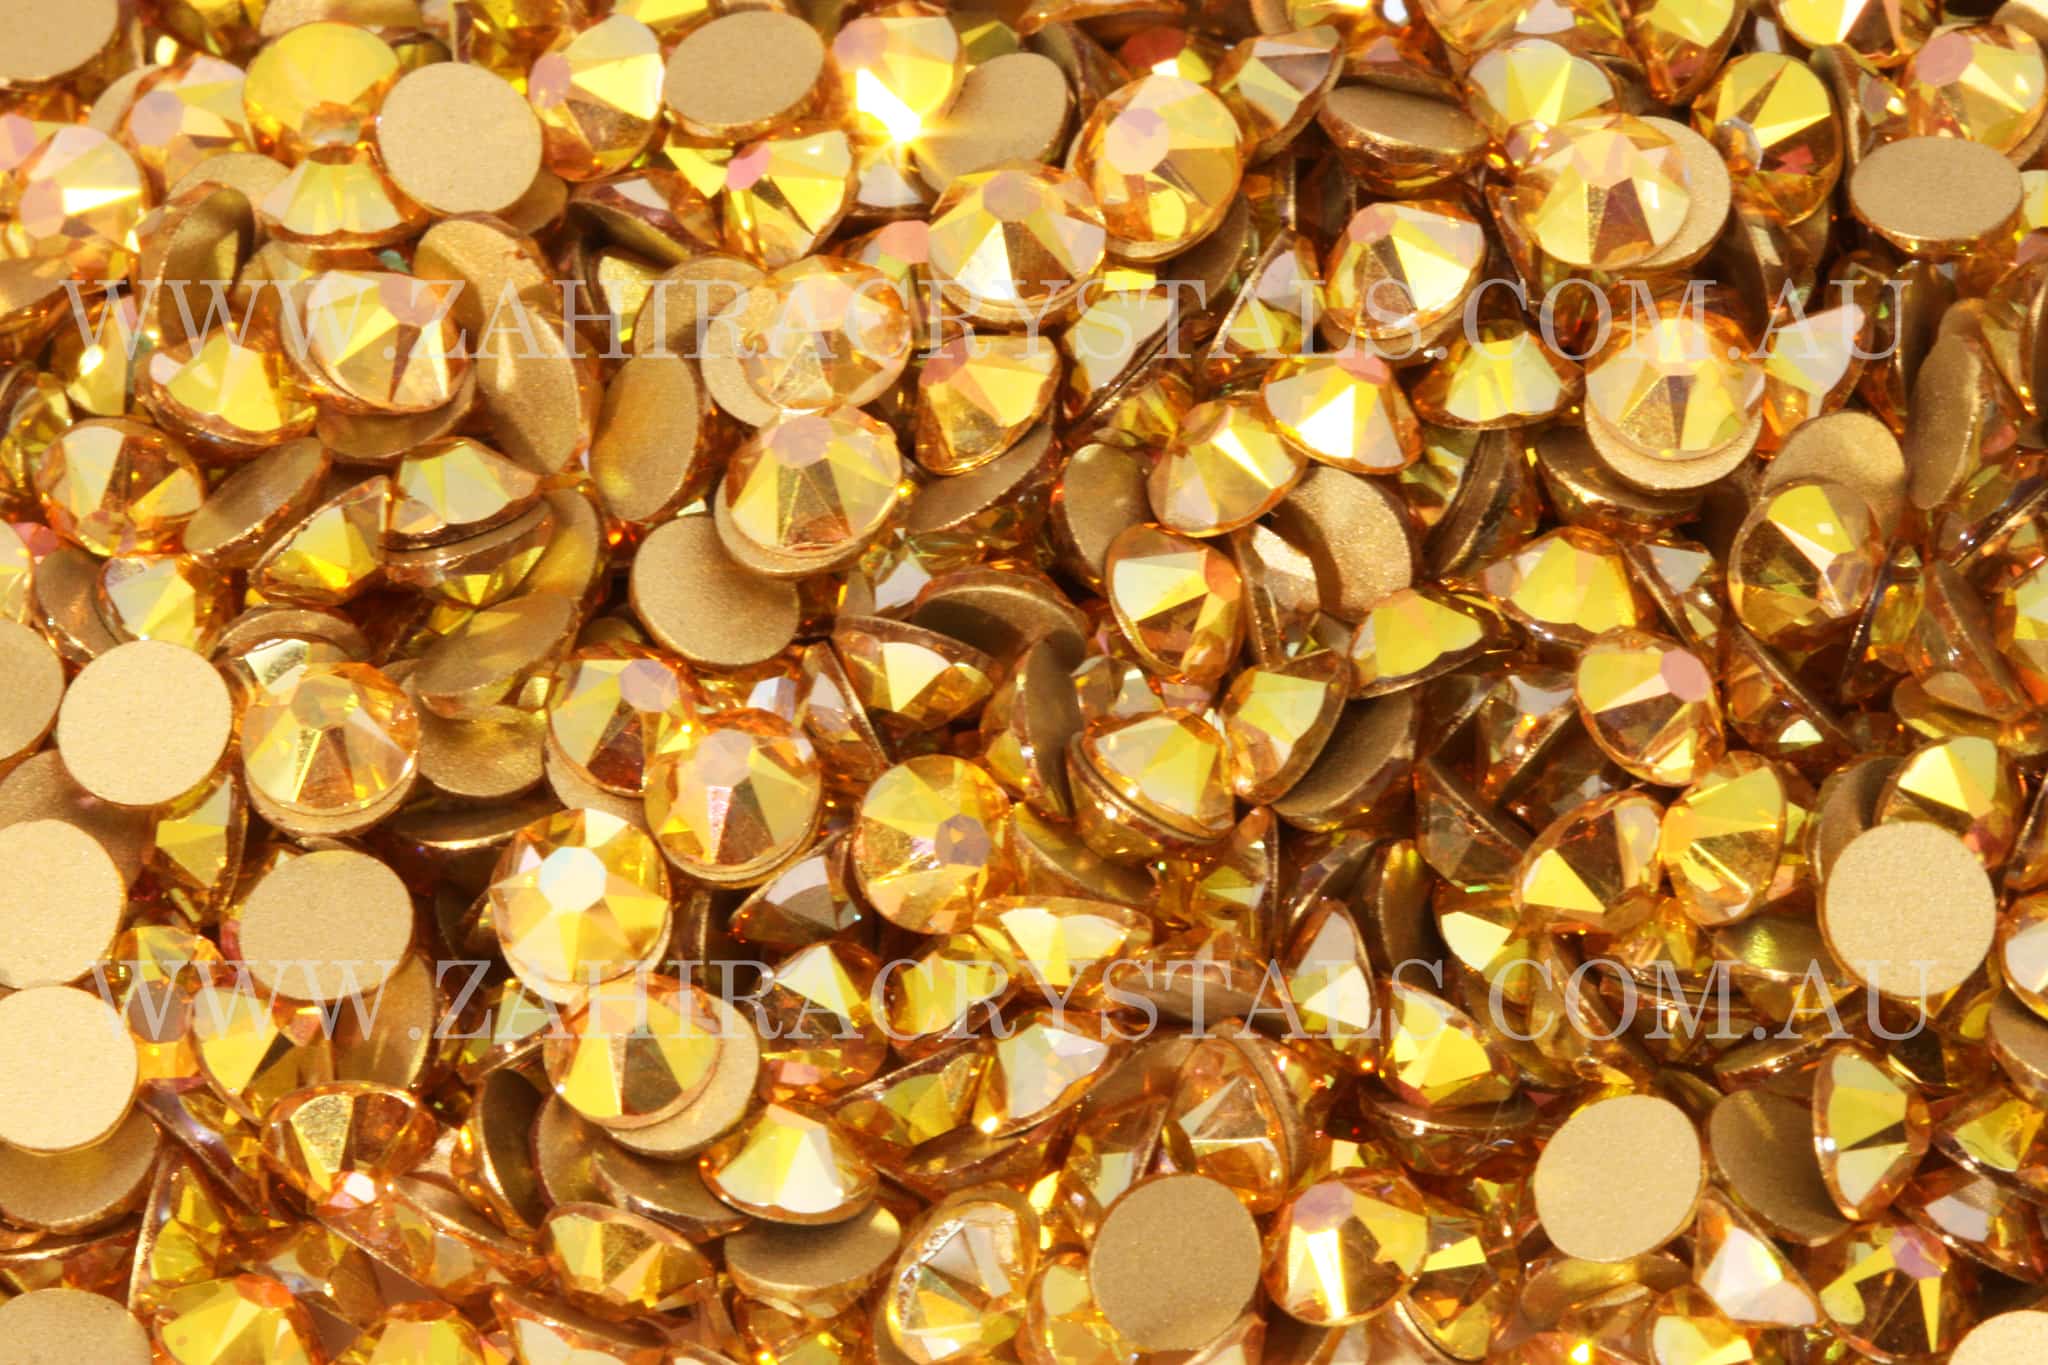 Gold Nugget Hotfix & Non Hotfix Zahira Rhinestones